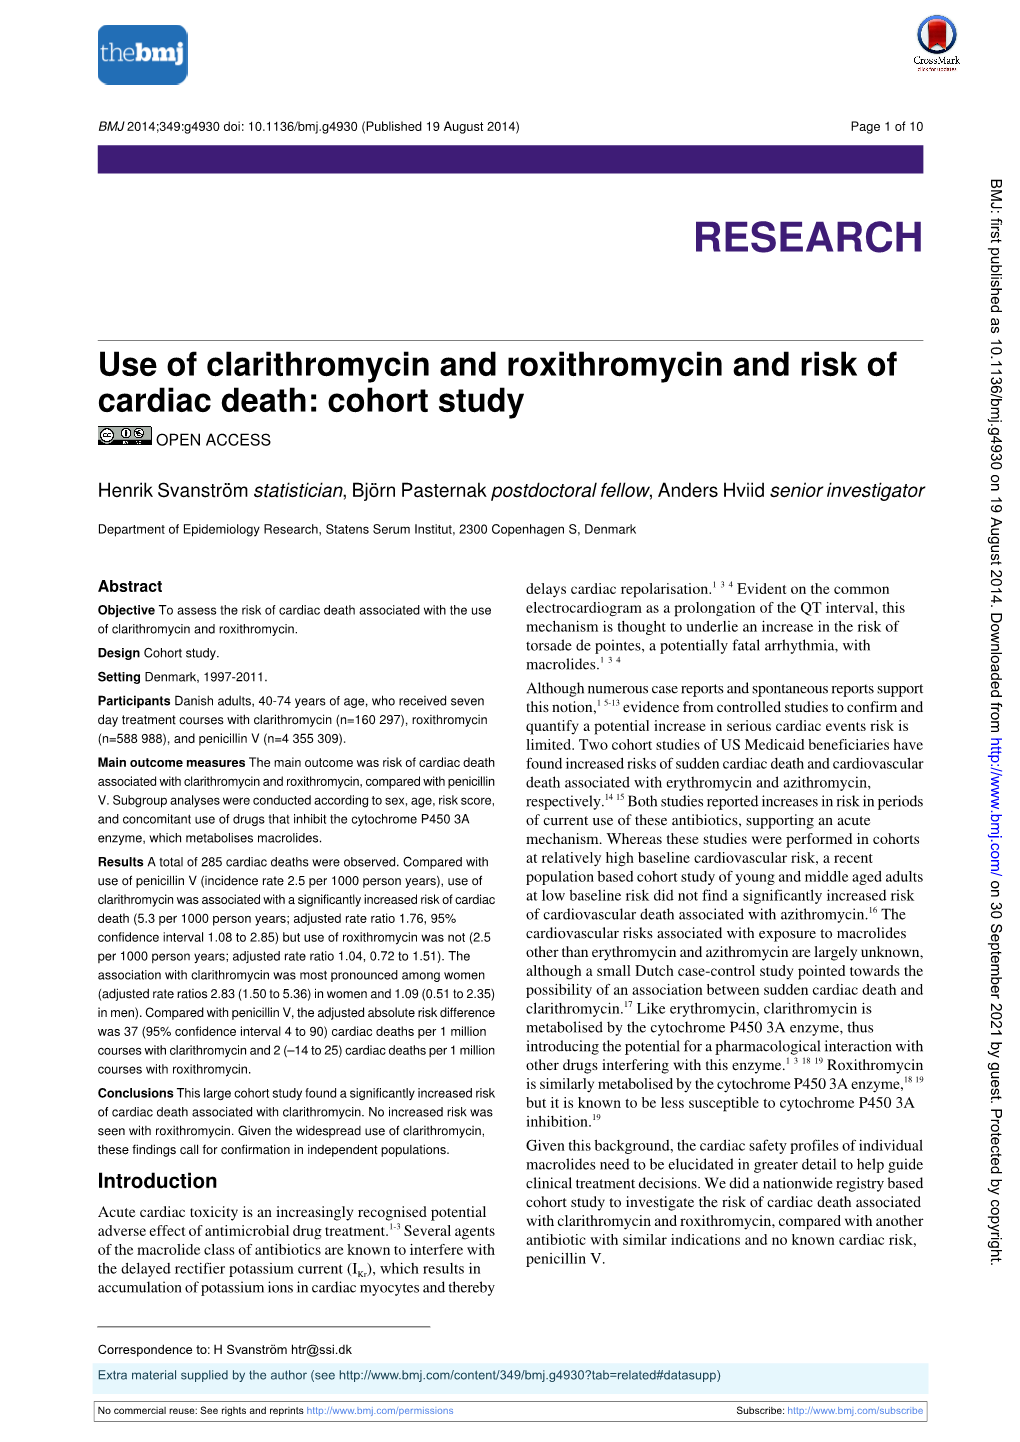 Use of Clarithromycin and Roxithromycin and Risk of Cardiac Death: Cohort Study OPEN ACCESS